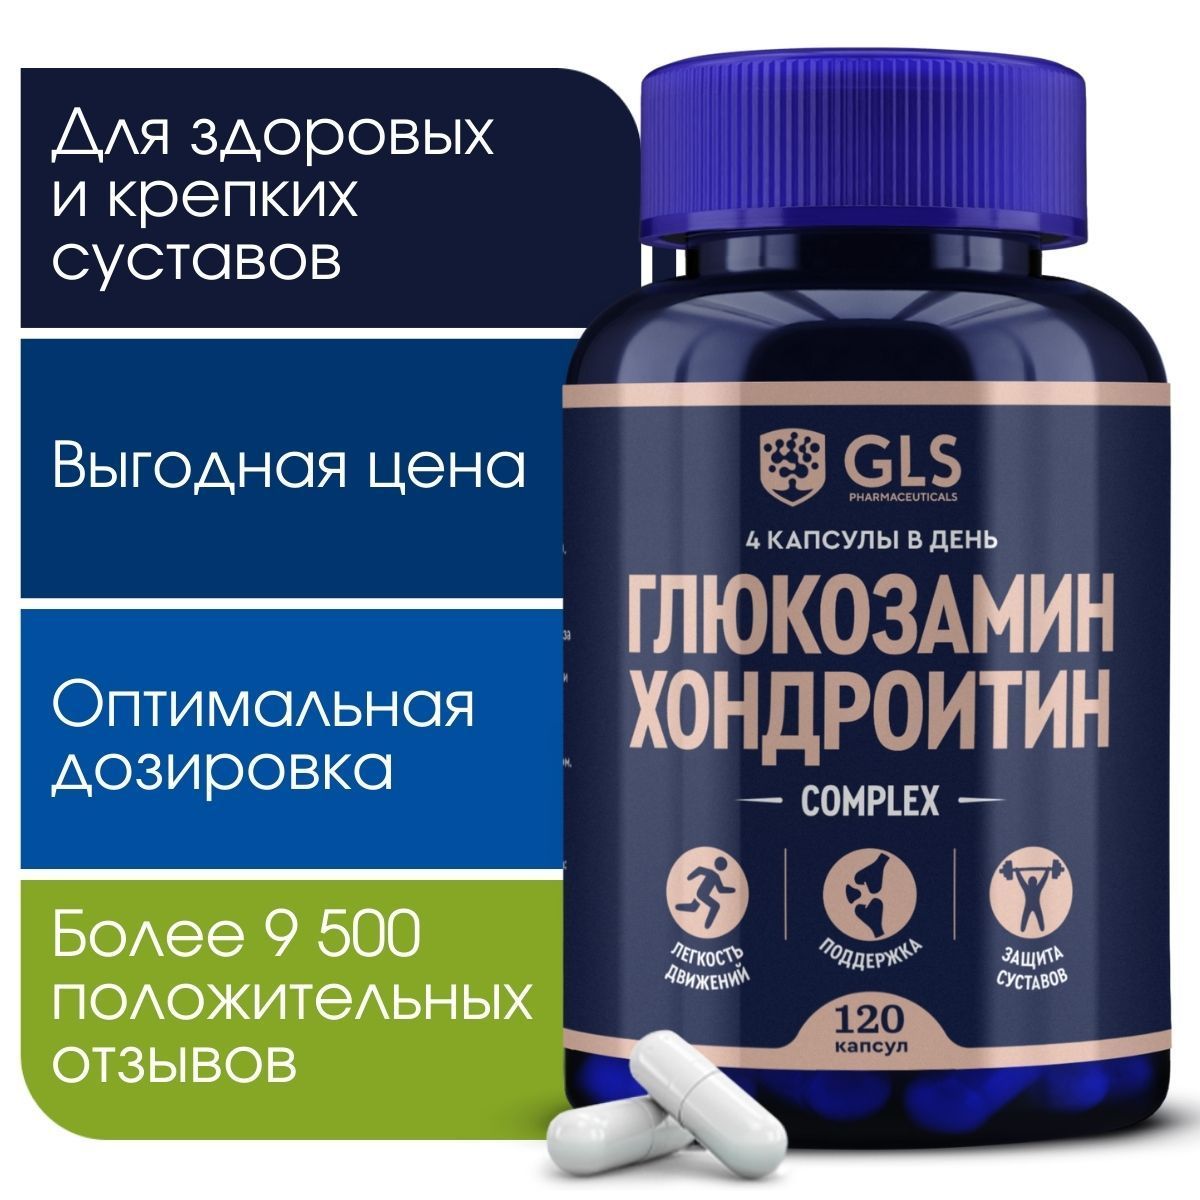 ГлюкозаминХондроитин800мг,/витаминыдлясуставов,связокихрящей,хондропротектор,120капсул